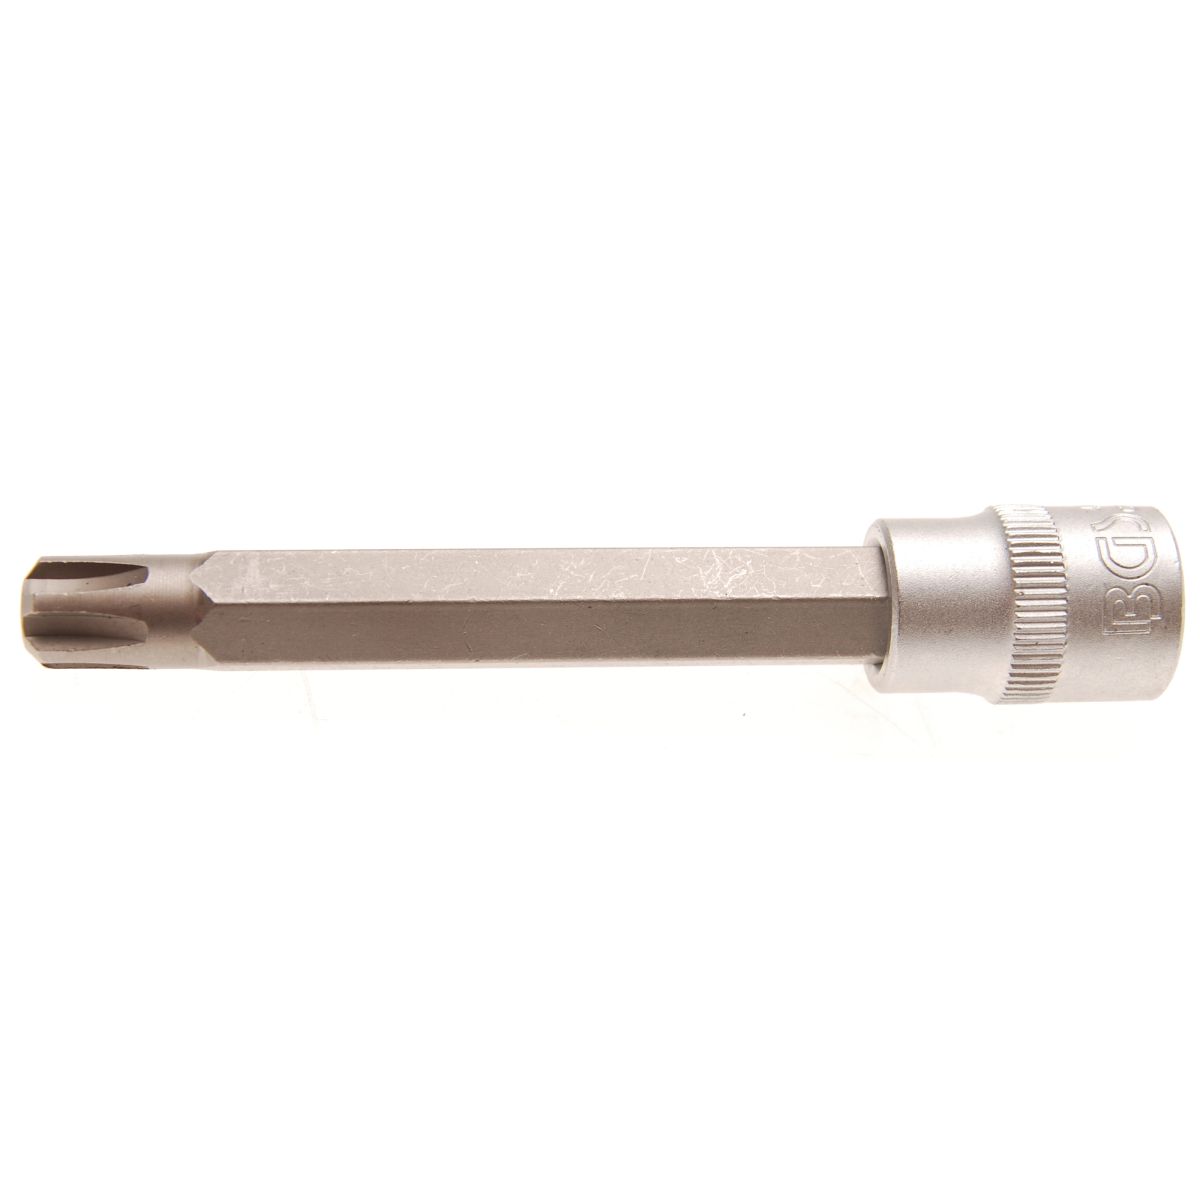 Bit-Einsatz | Länge 100 mm | Antrieb Innenvierkant 10 mm (3/8") | Keil-Profil (für RIBE) M8